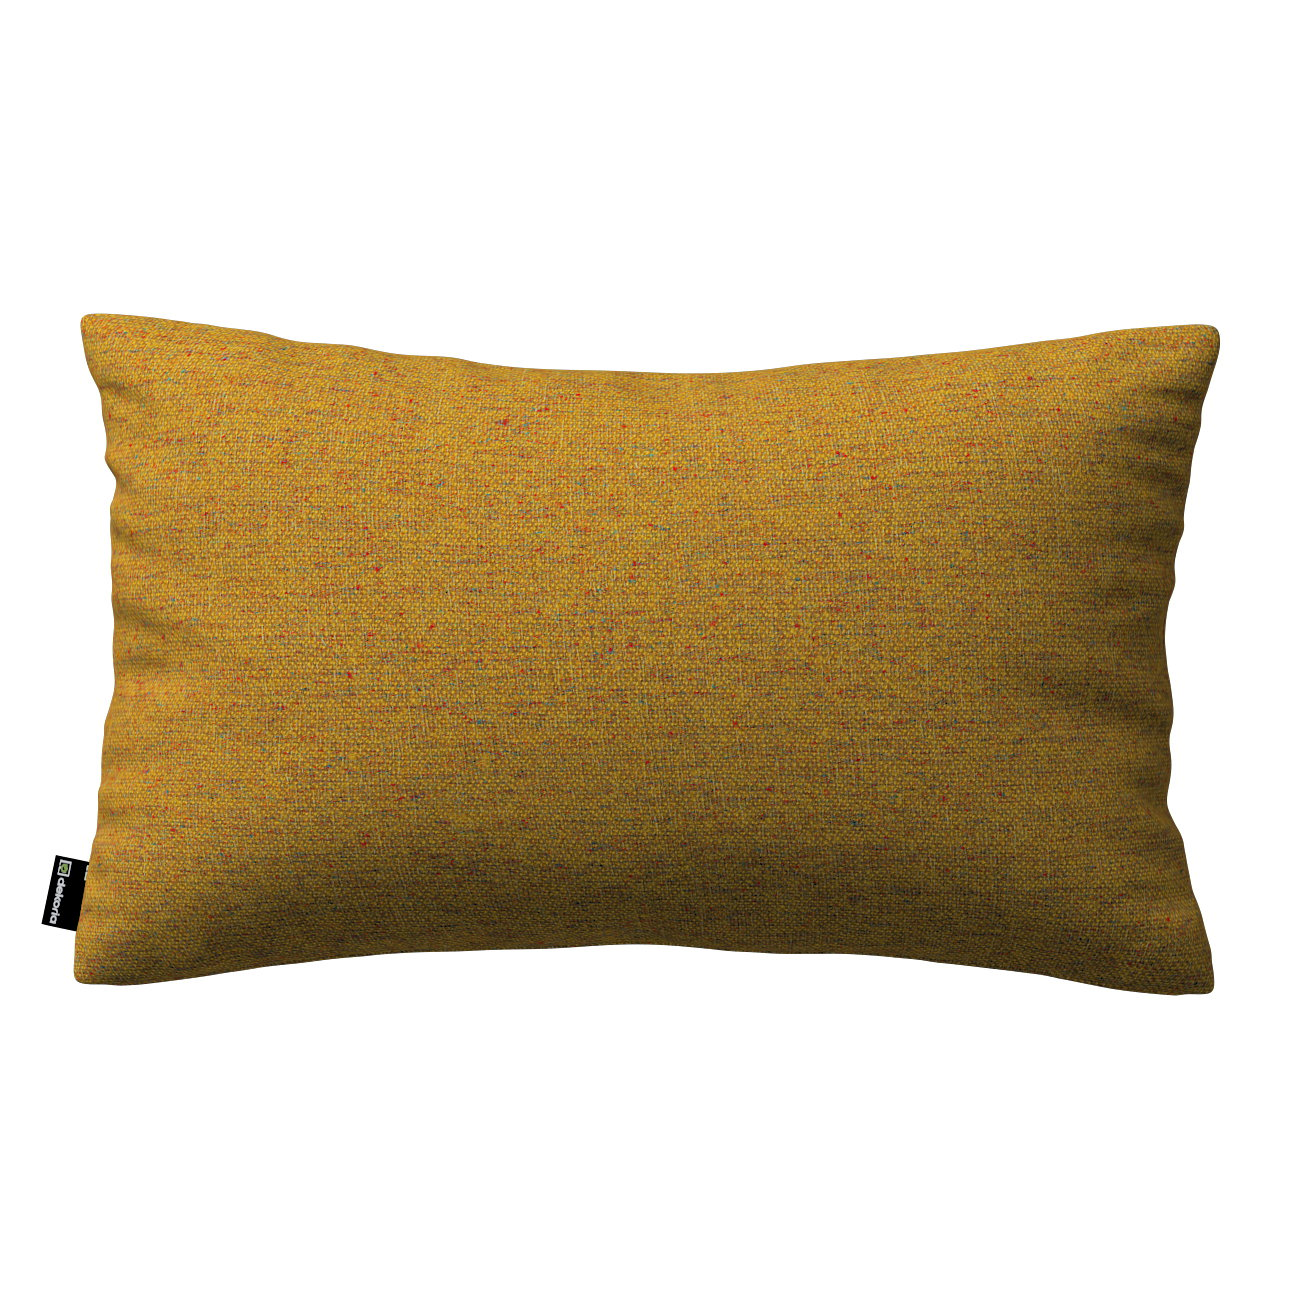 Dekoria Karin - jednoduchá obliečka, 60x40cm, žltá melanž, 60 x 40 cm, Madrid, 162-35